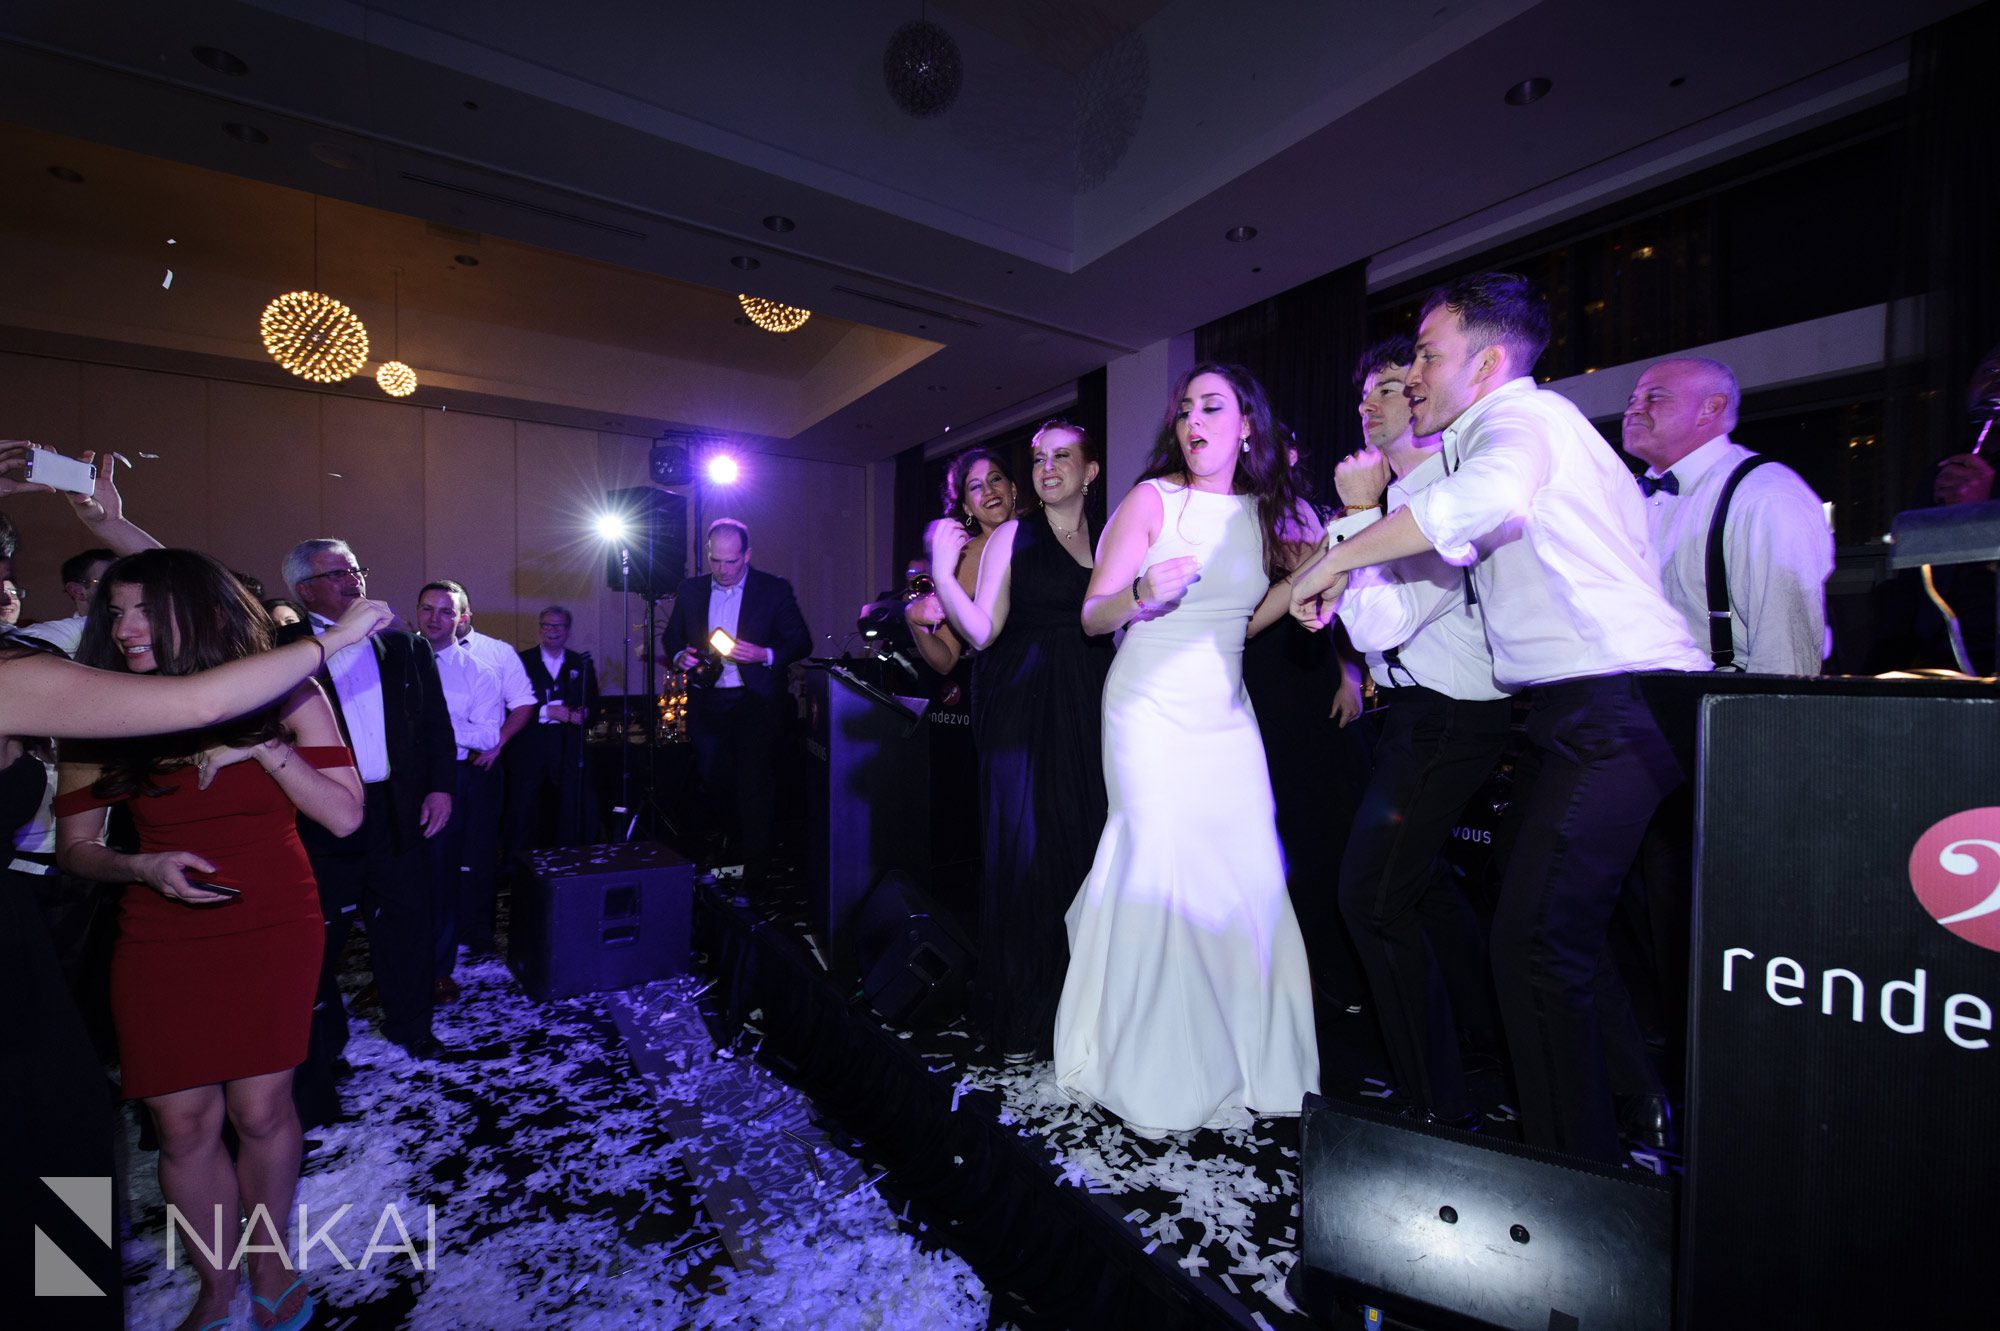 chicago radisson blu wedding picture reception dancing